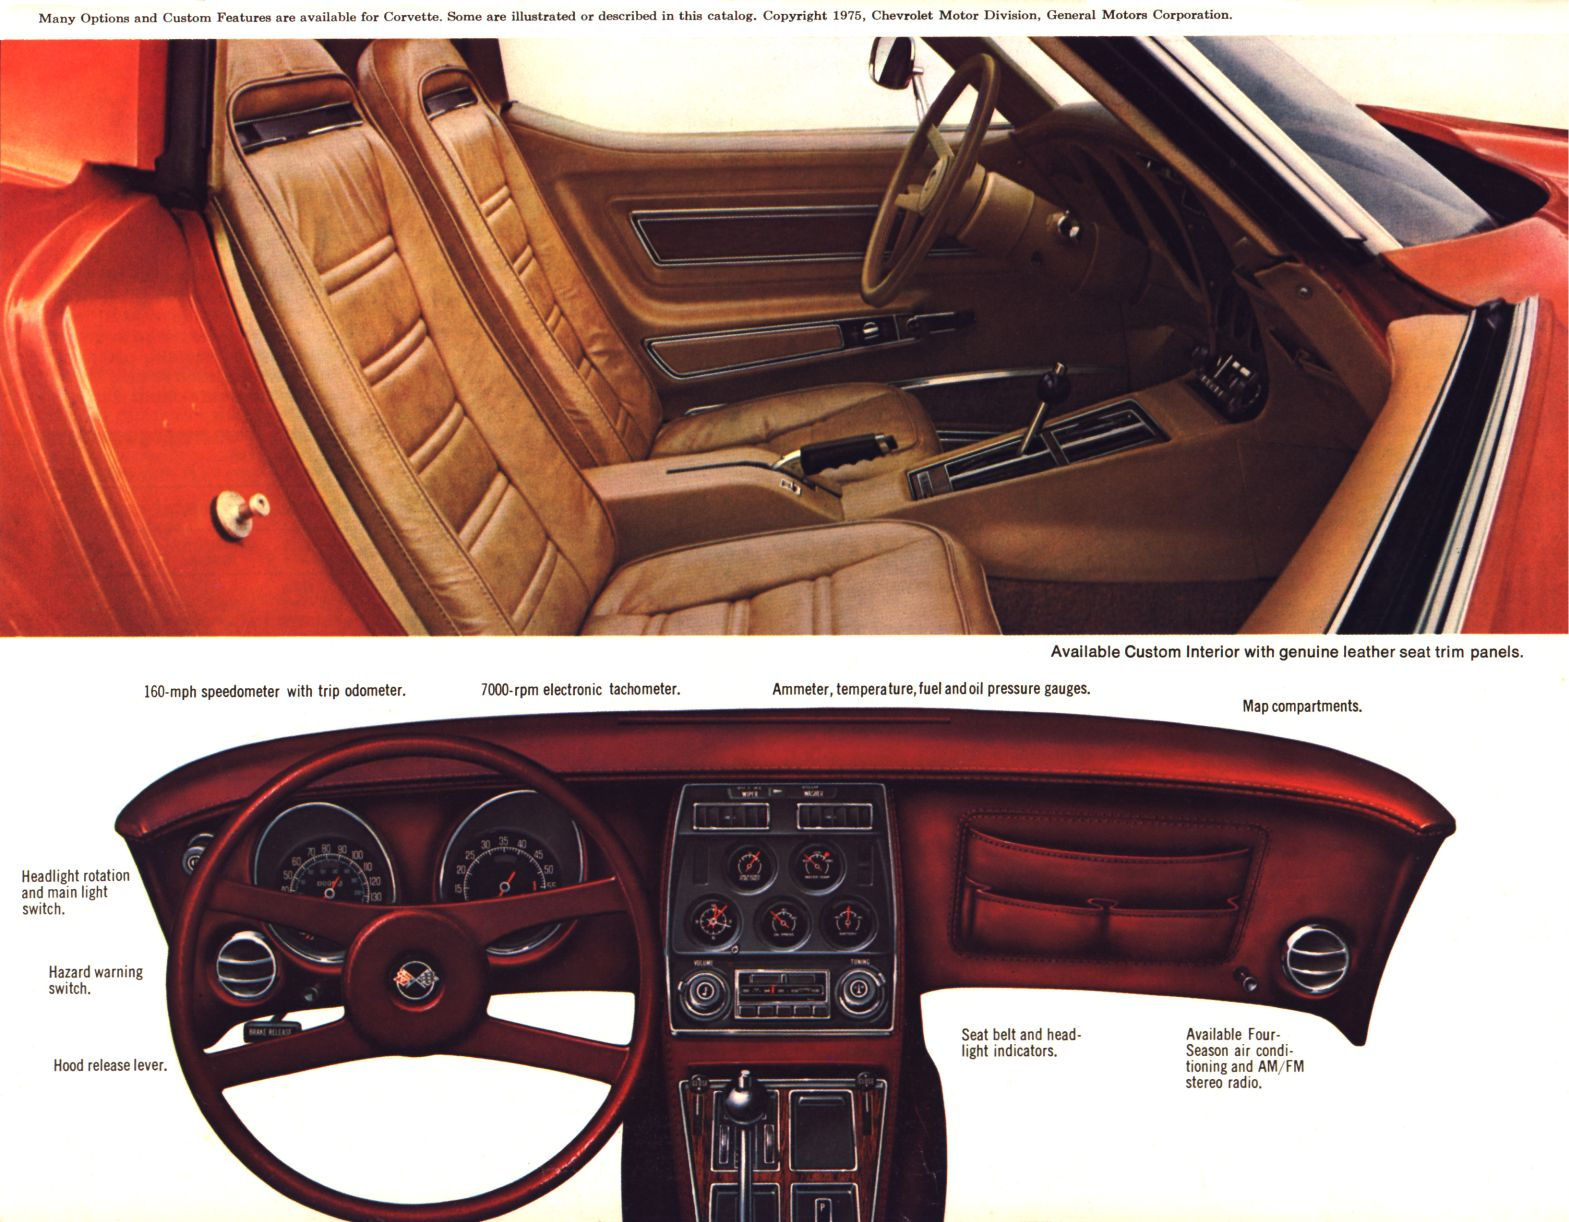 1976 Corvette Brochure Page 4